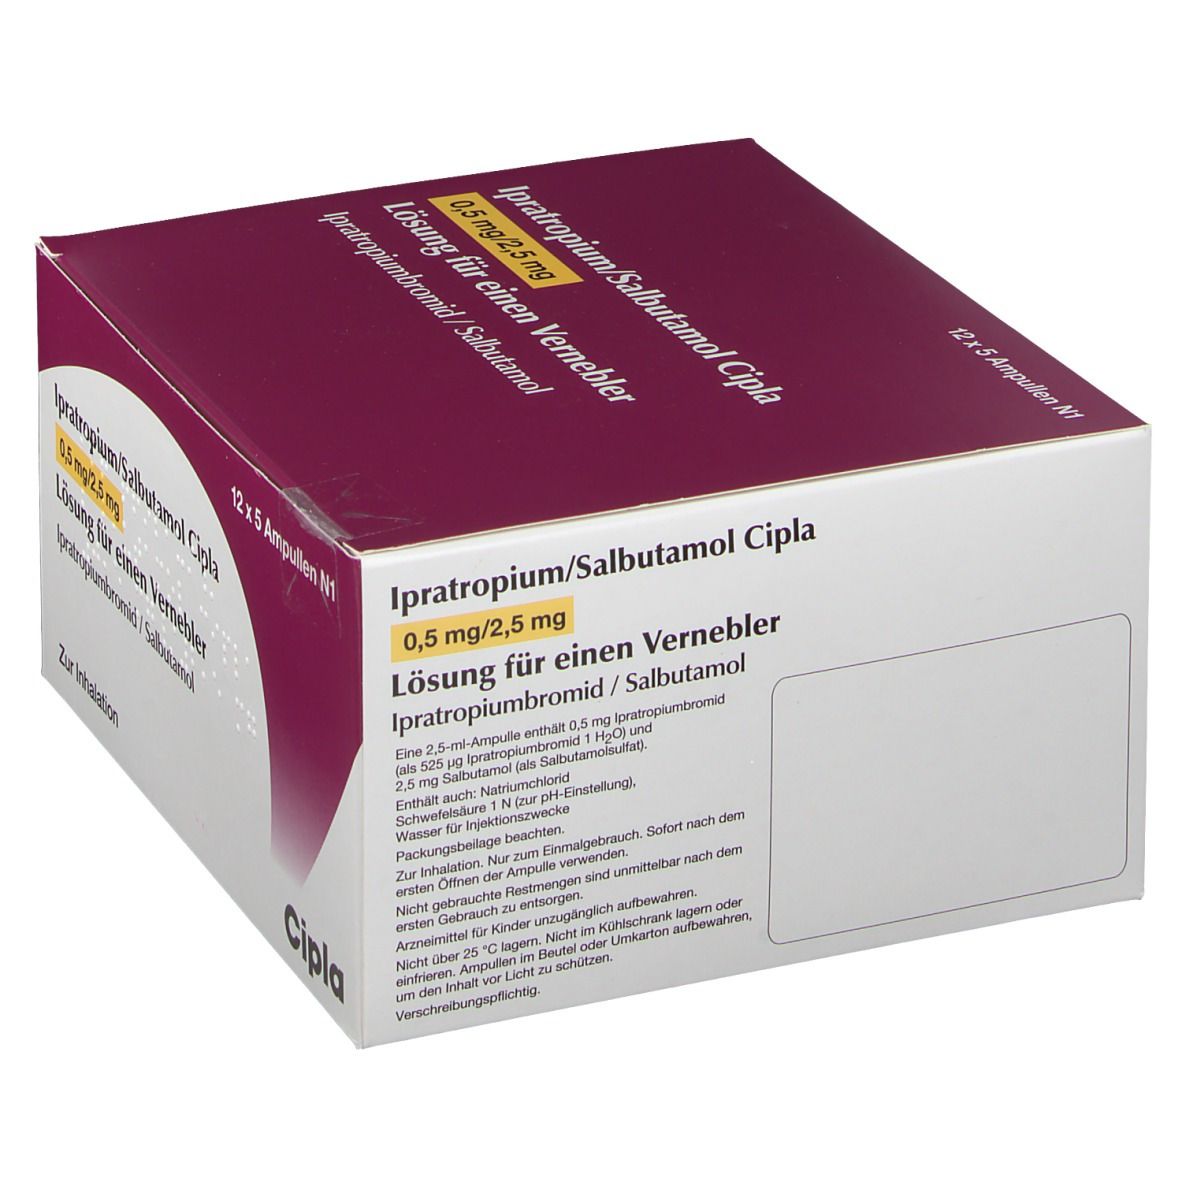 Ipratropium/Salbutamol Cipla 0,5 mg/2,5 mg